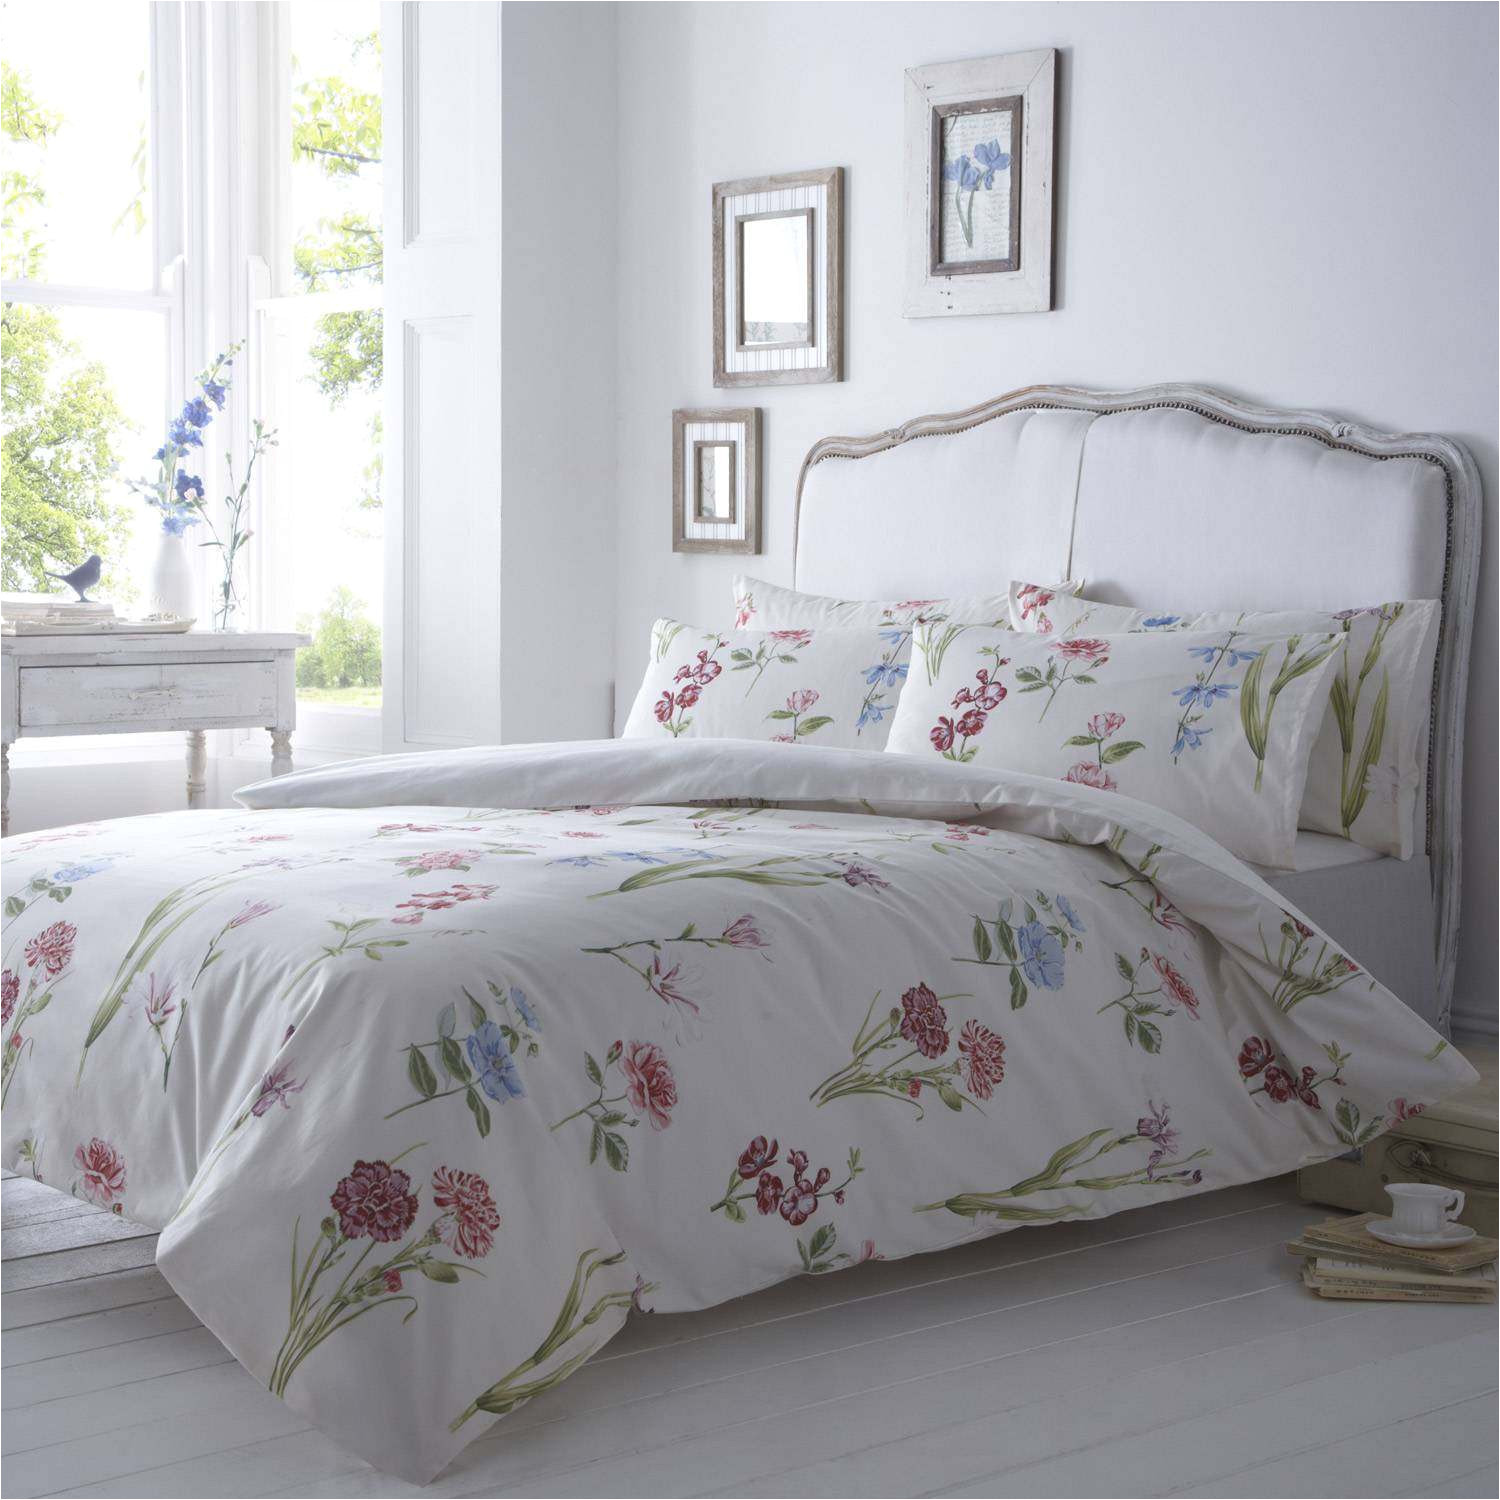 white full bedroom set unique bedroom ideas bed linen luxury bloomingdales mattresses 0d